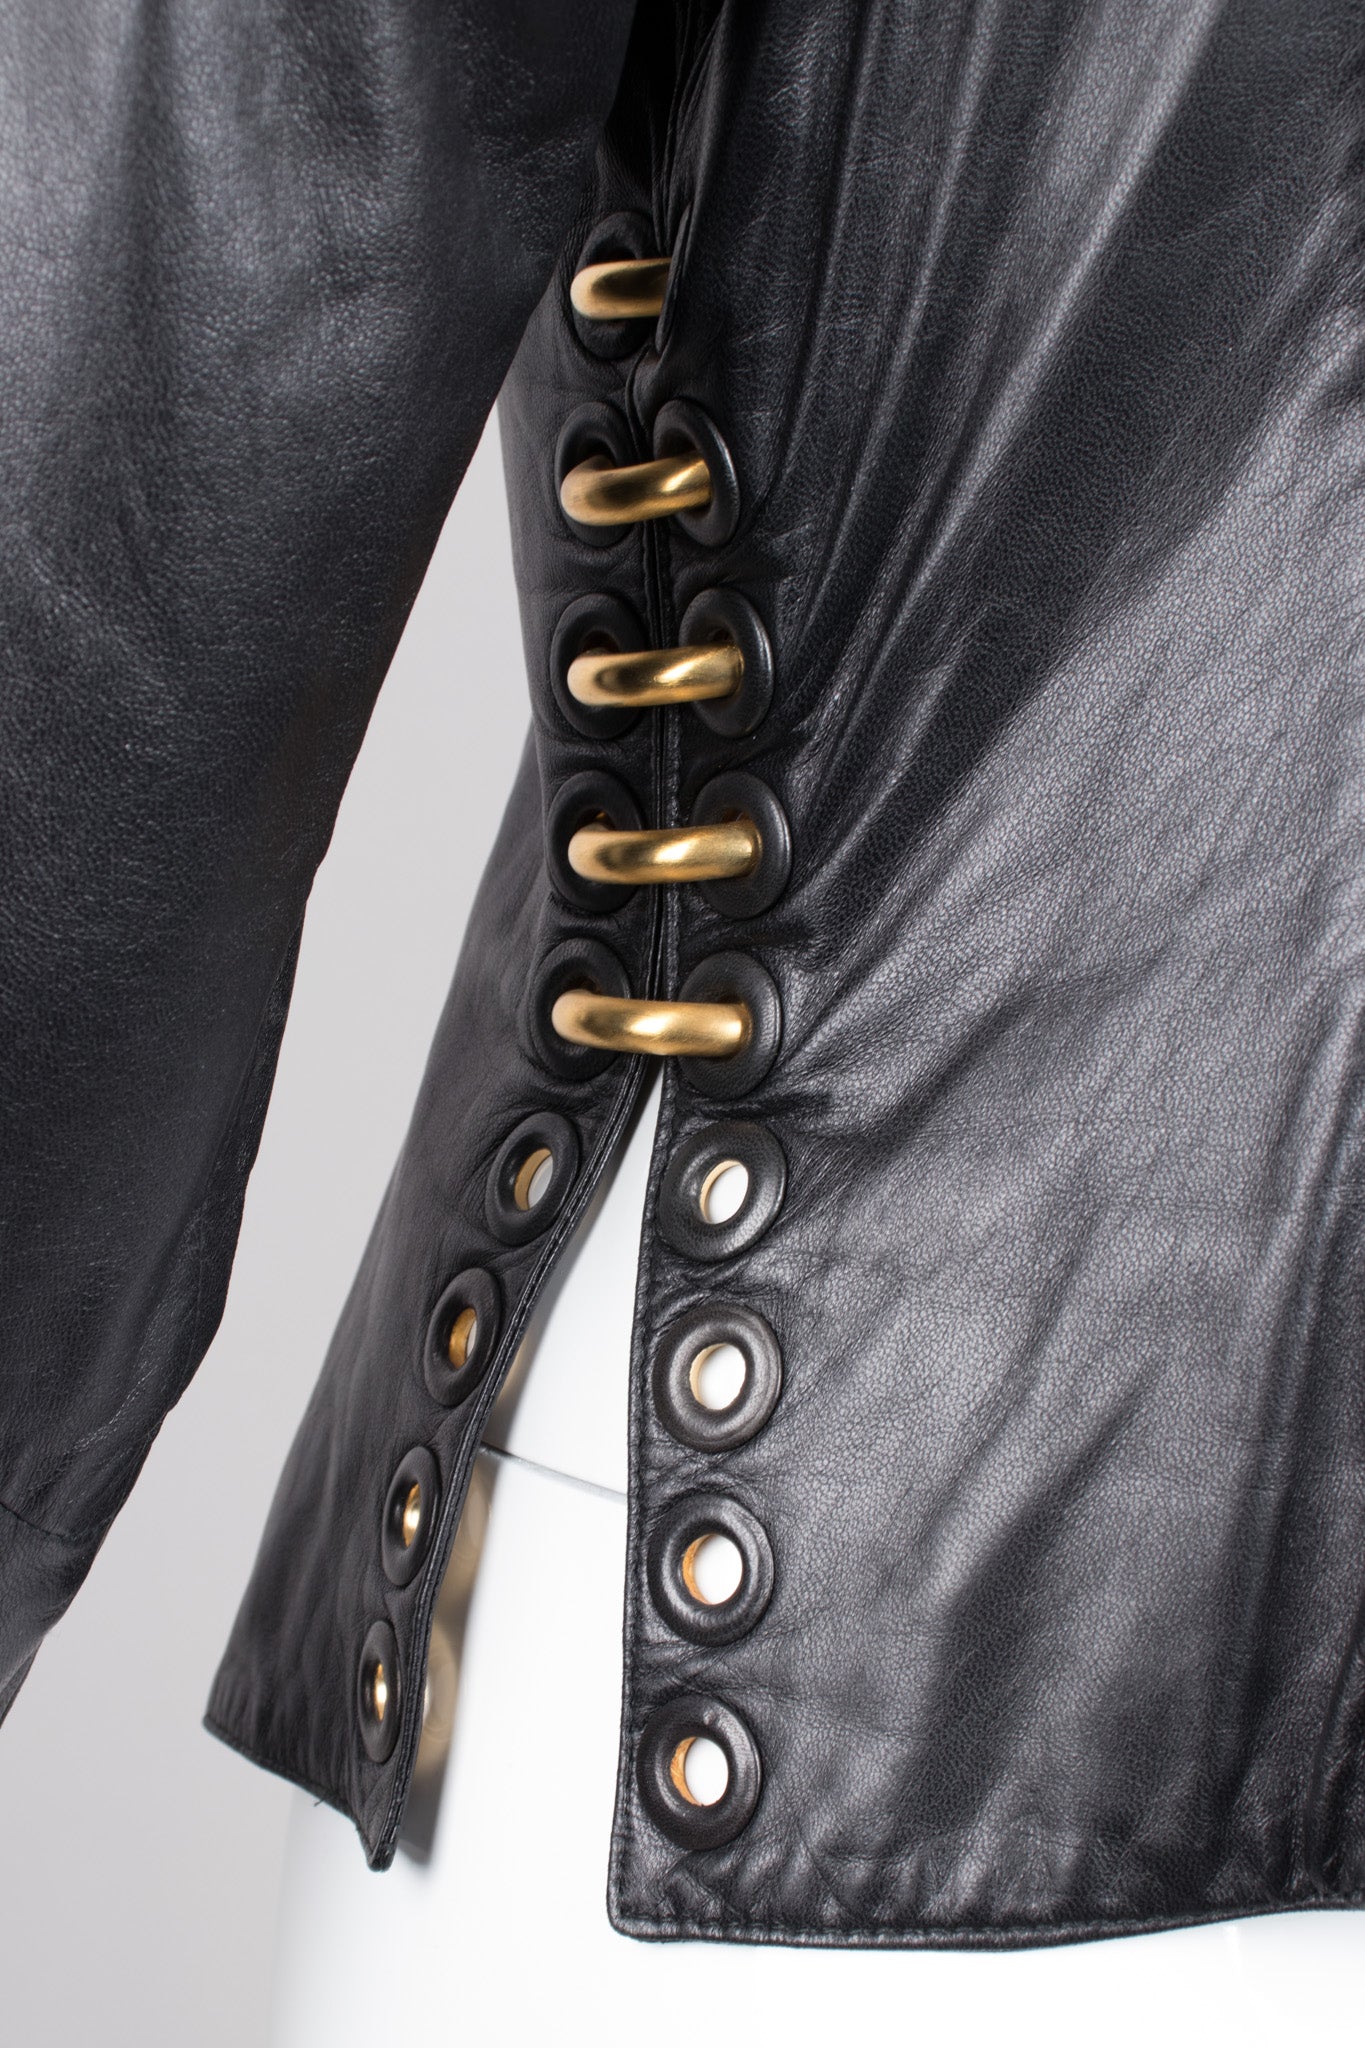 Gianfranco Ferre African Embellished Leather Jacket